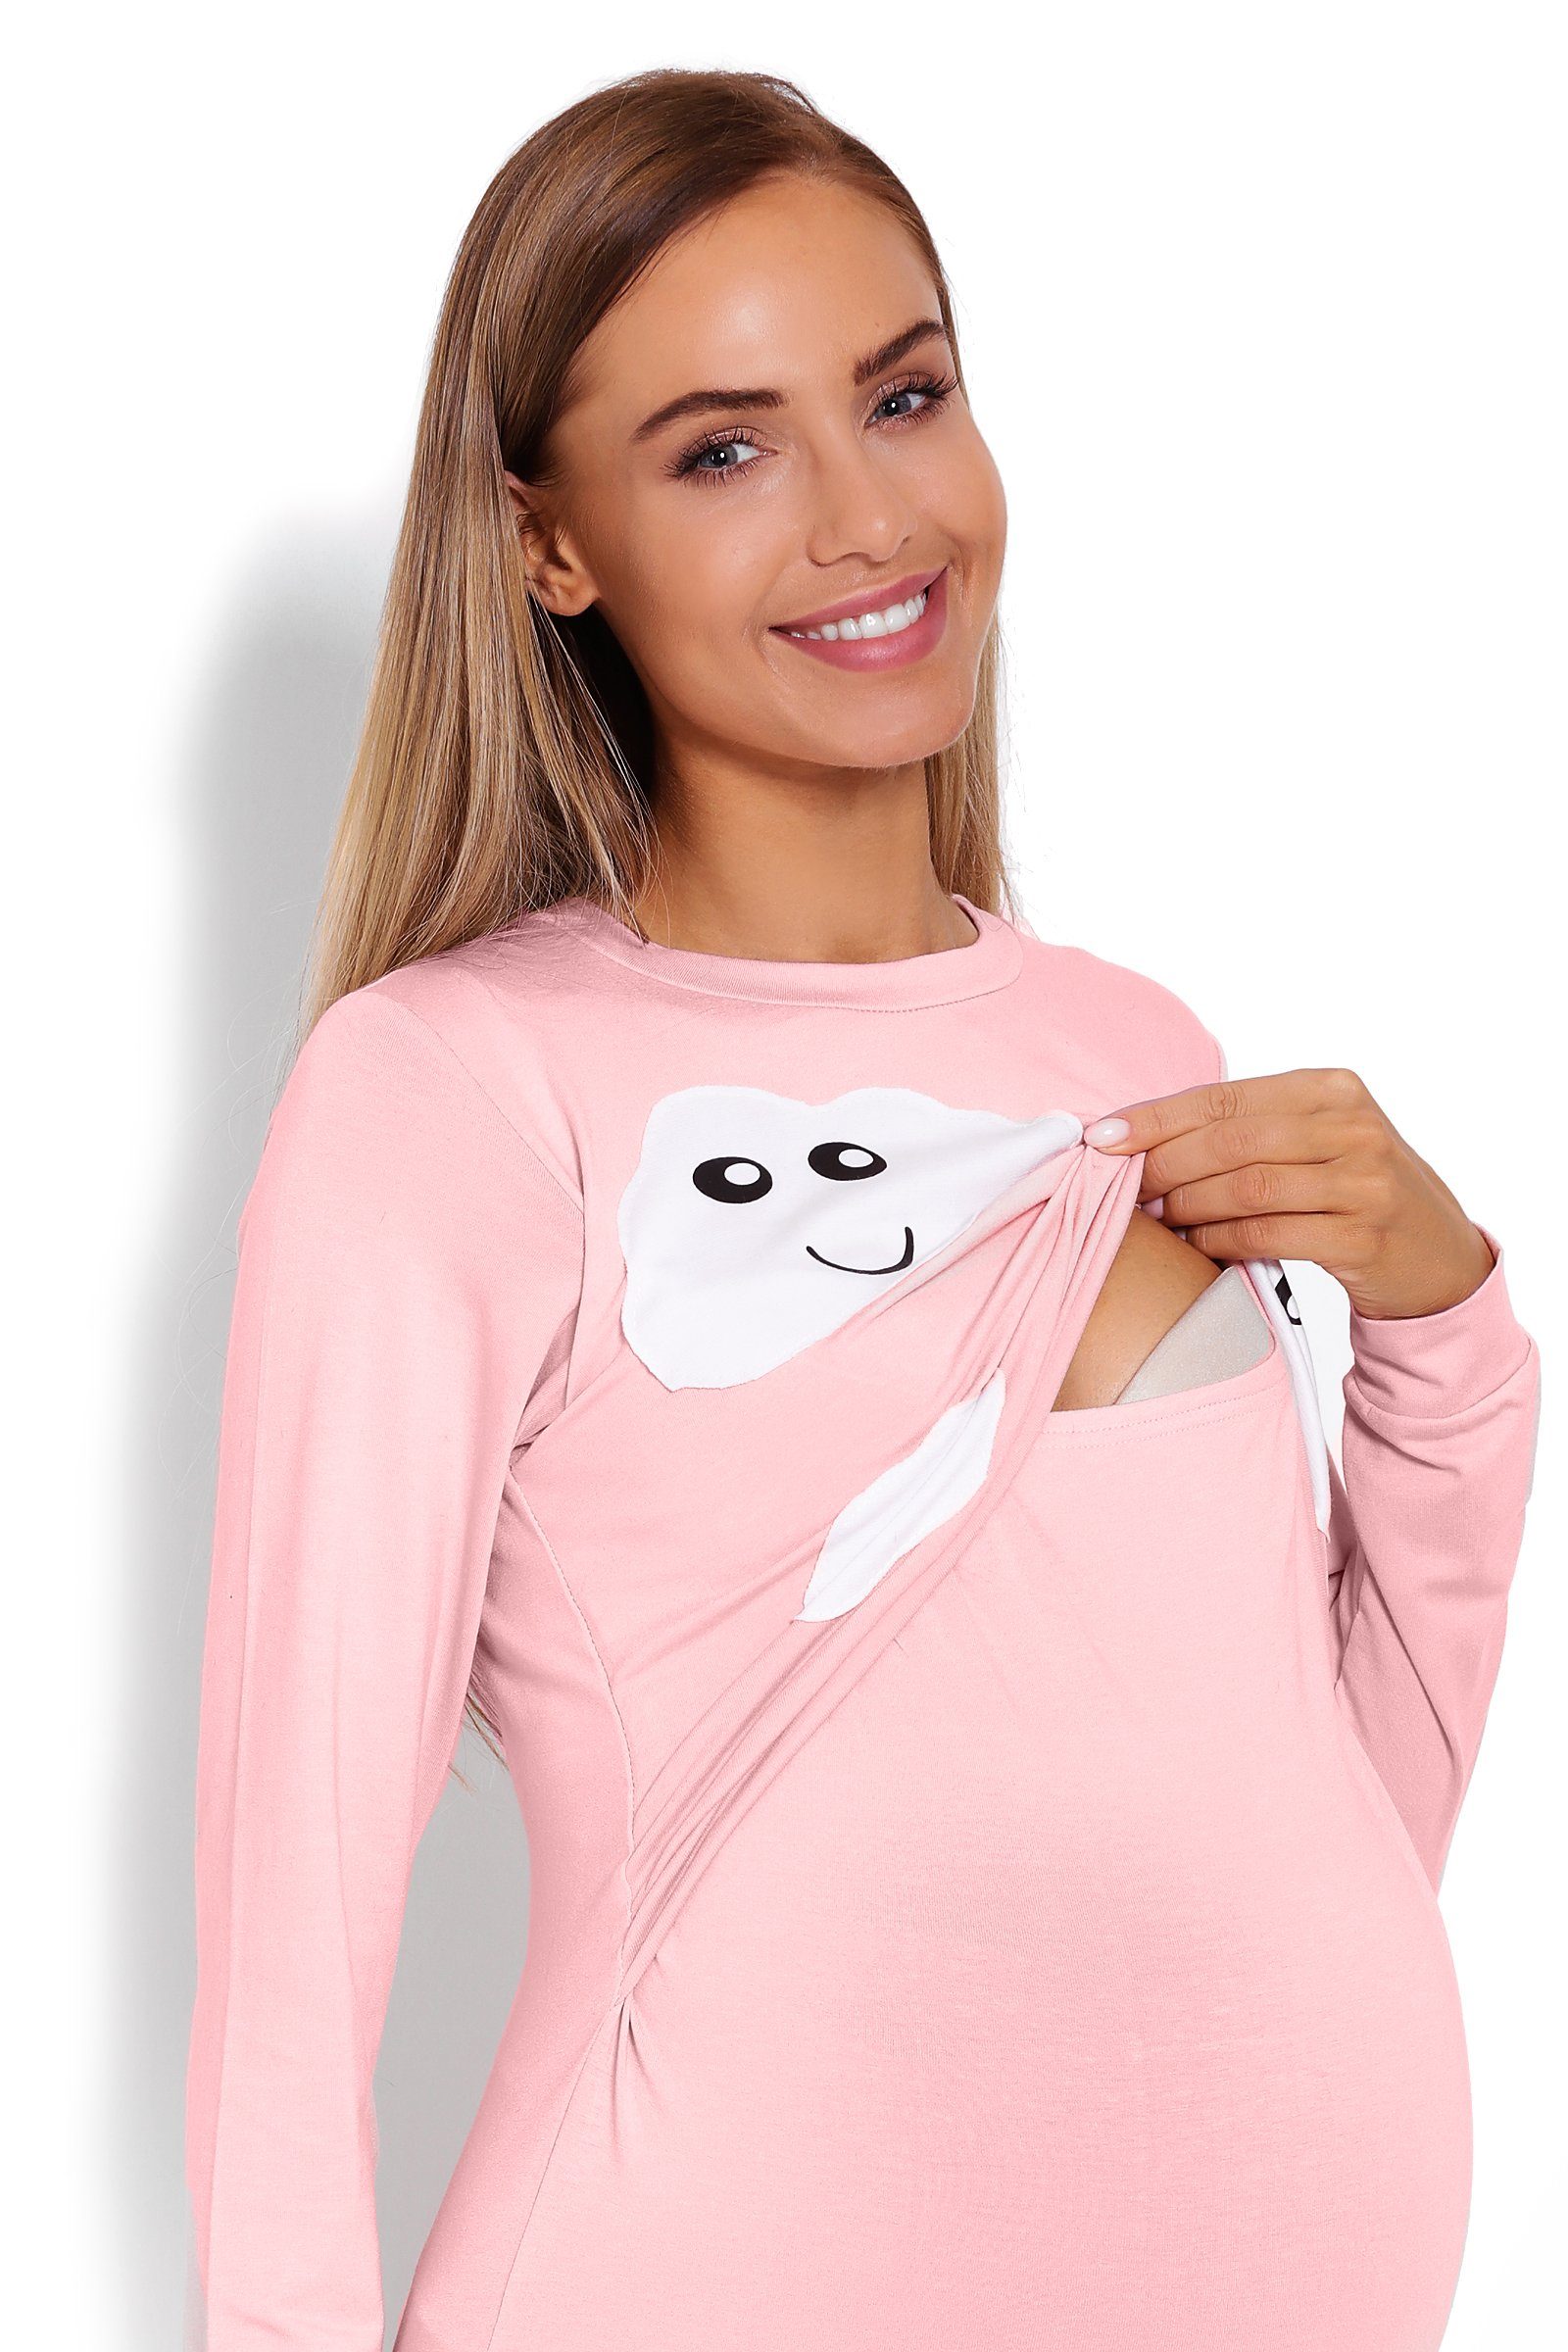 Stillen Stillschlafanzug Umstandspyjama Schlafanzug Schwangerschaft PeeKaBoo rosa/pink